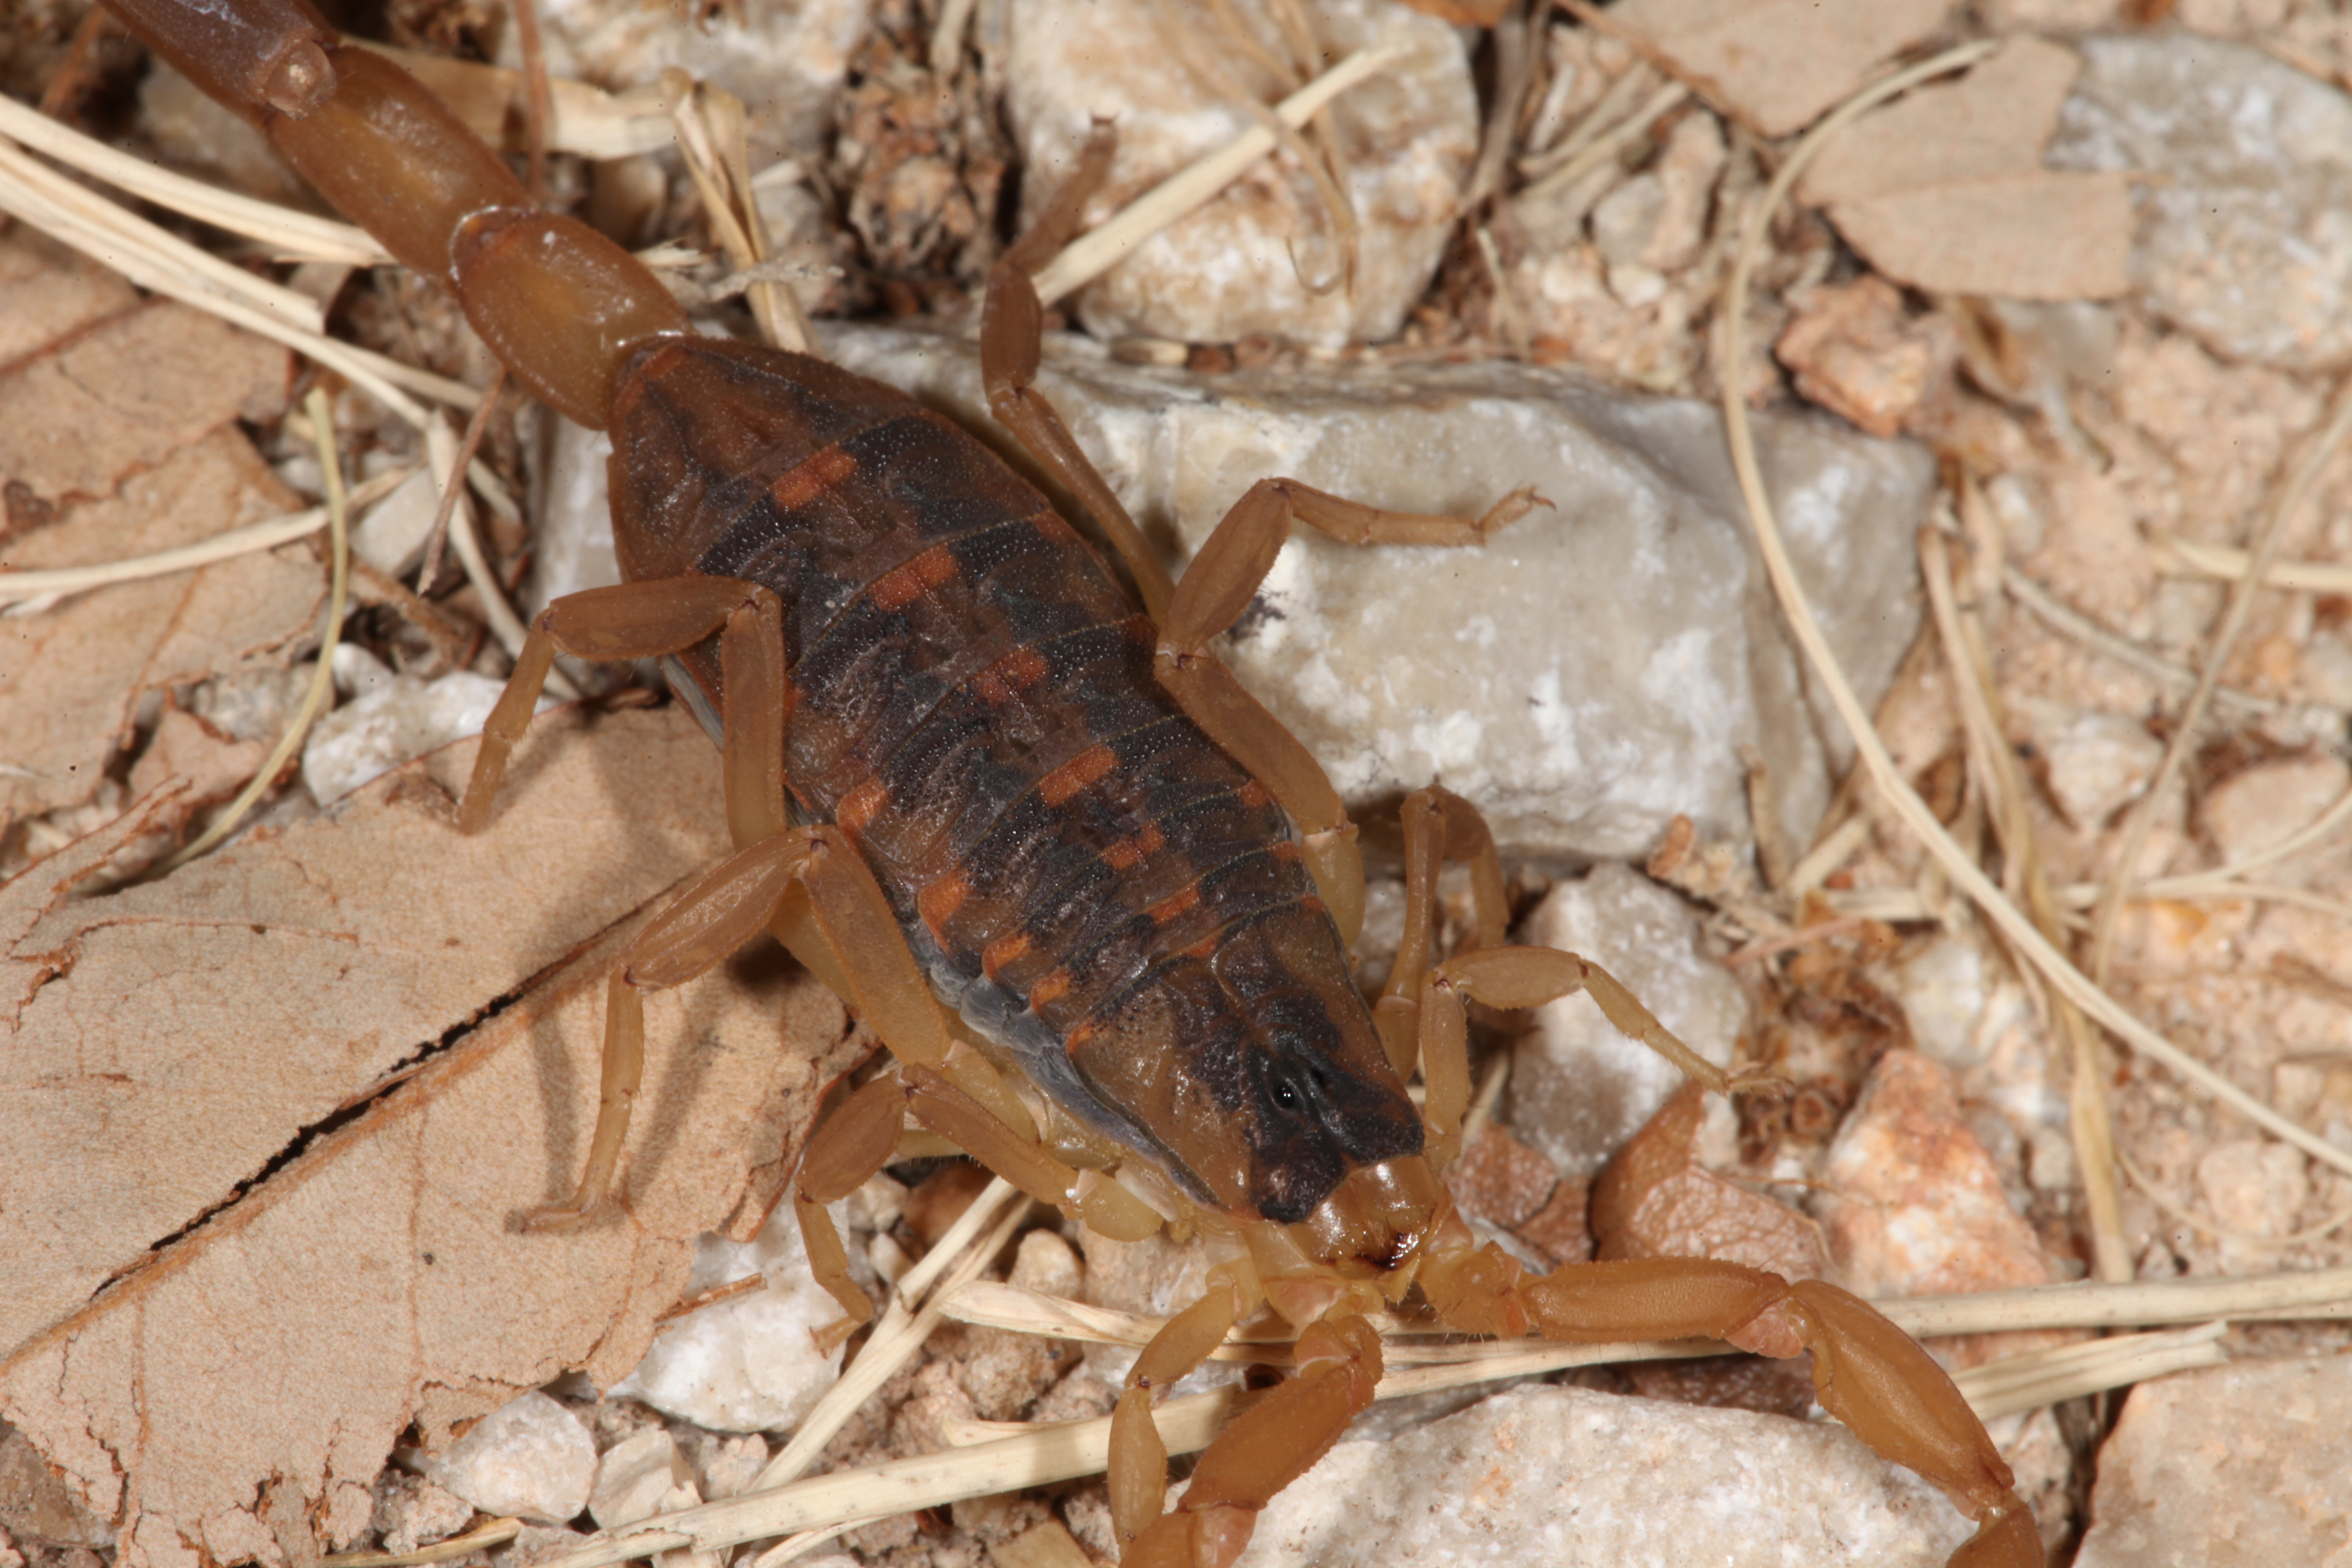 Scorpion photo